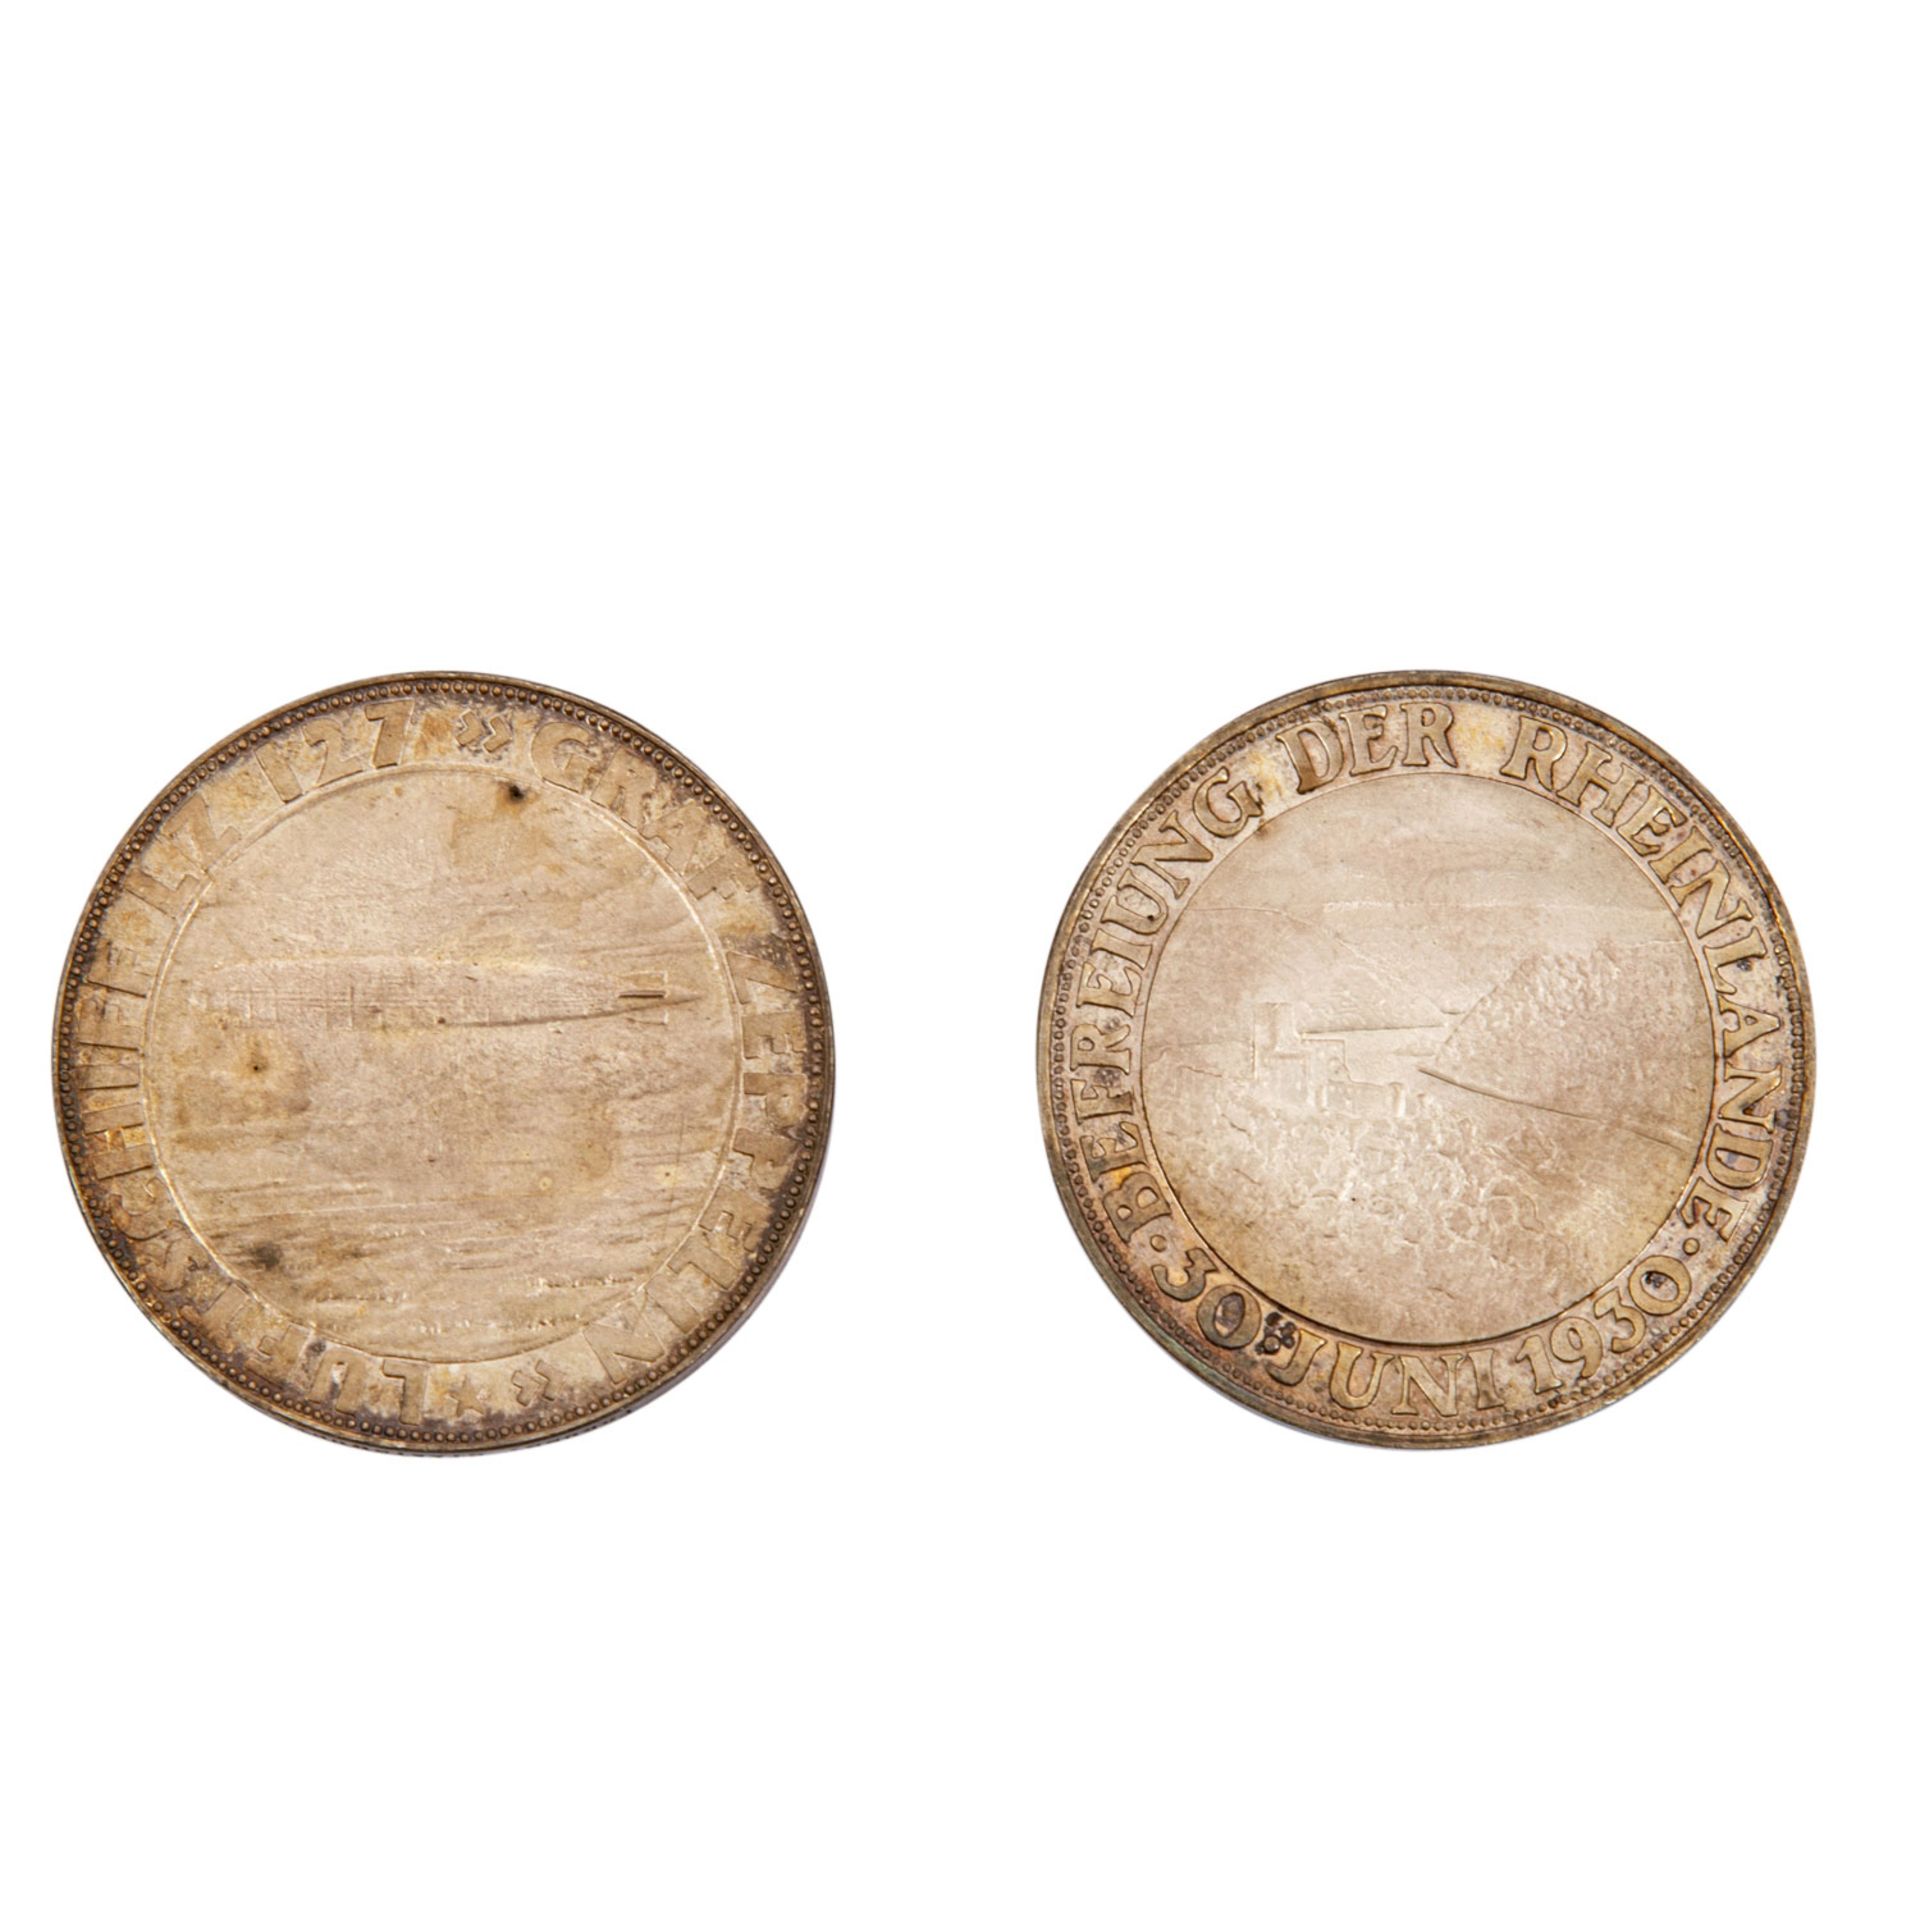 2 Silbermedaillen der Weimarer Republik - 1 x Weimarer Republik - Silbermedaille 1930, von - Image 2 of 2